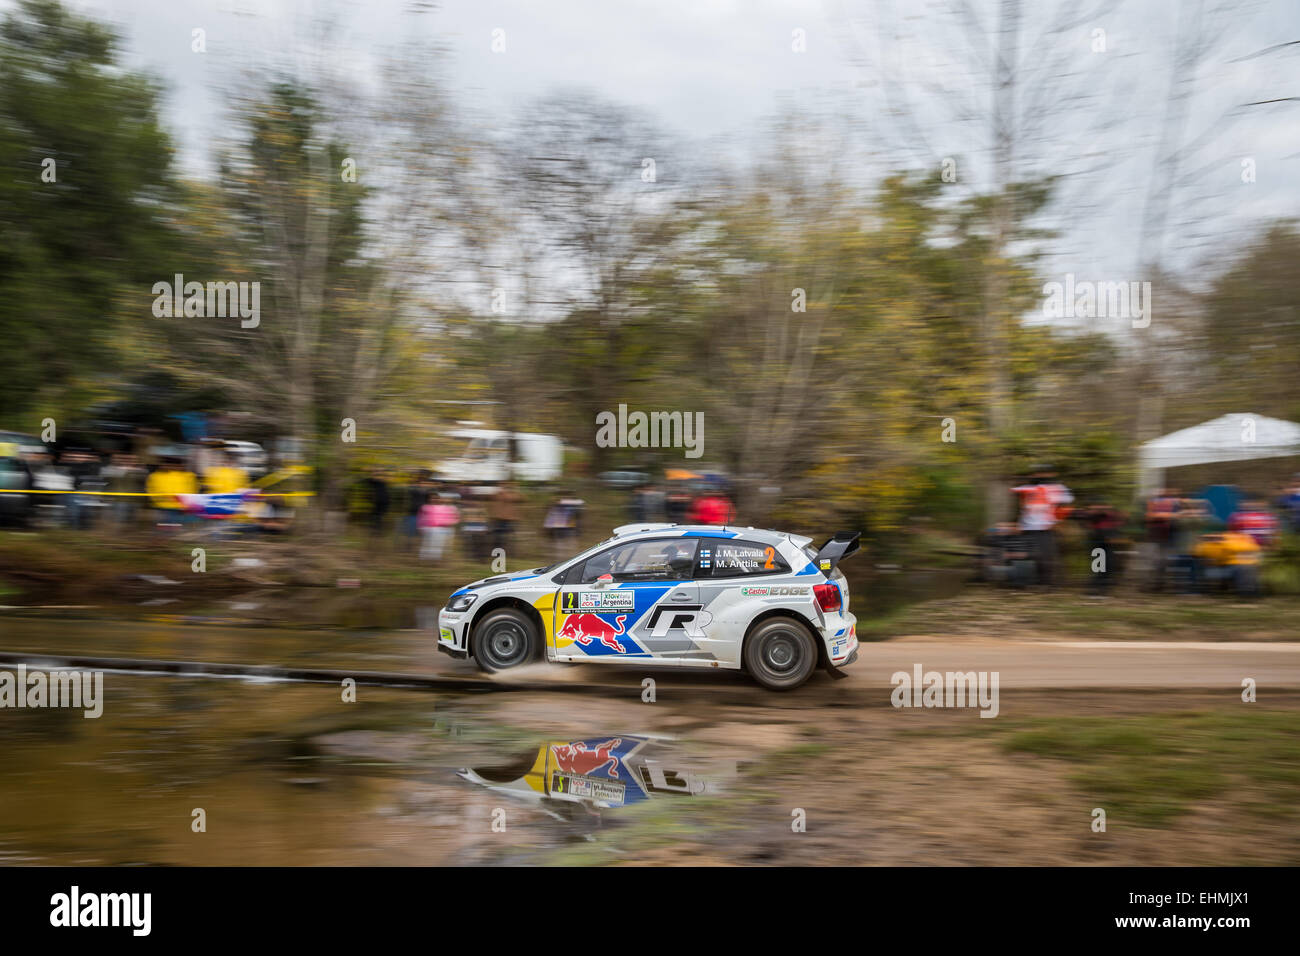 Jari-Matti Latvala (FIN) of the VW Motorsport World Rally Team competes in Rally Argentina 2014. by Michael Vettas/Vettas Media Stock Photo